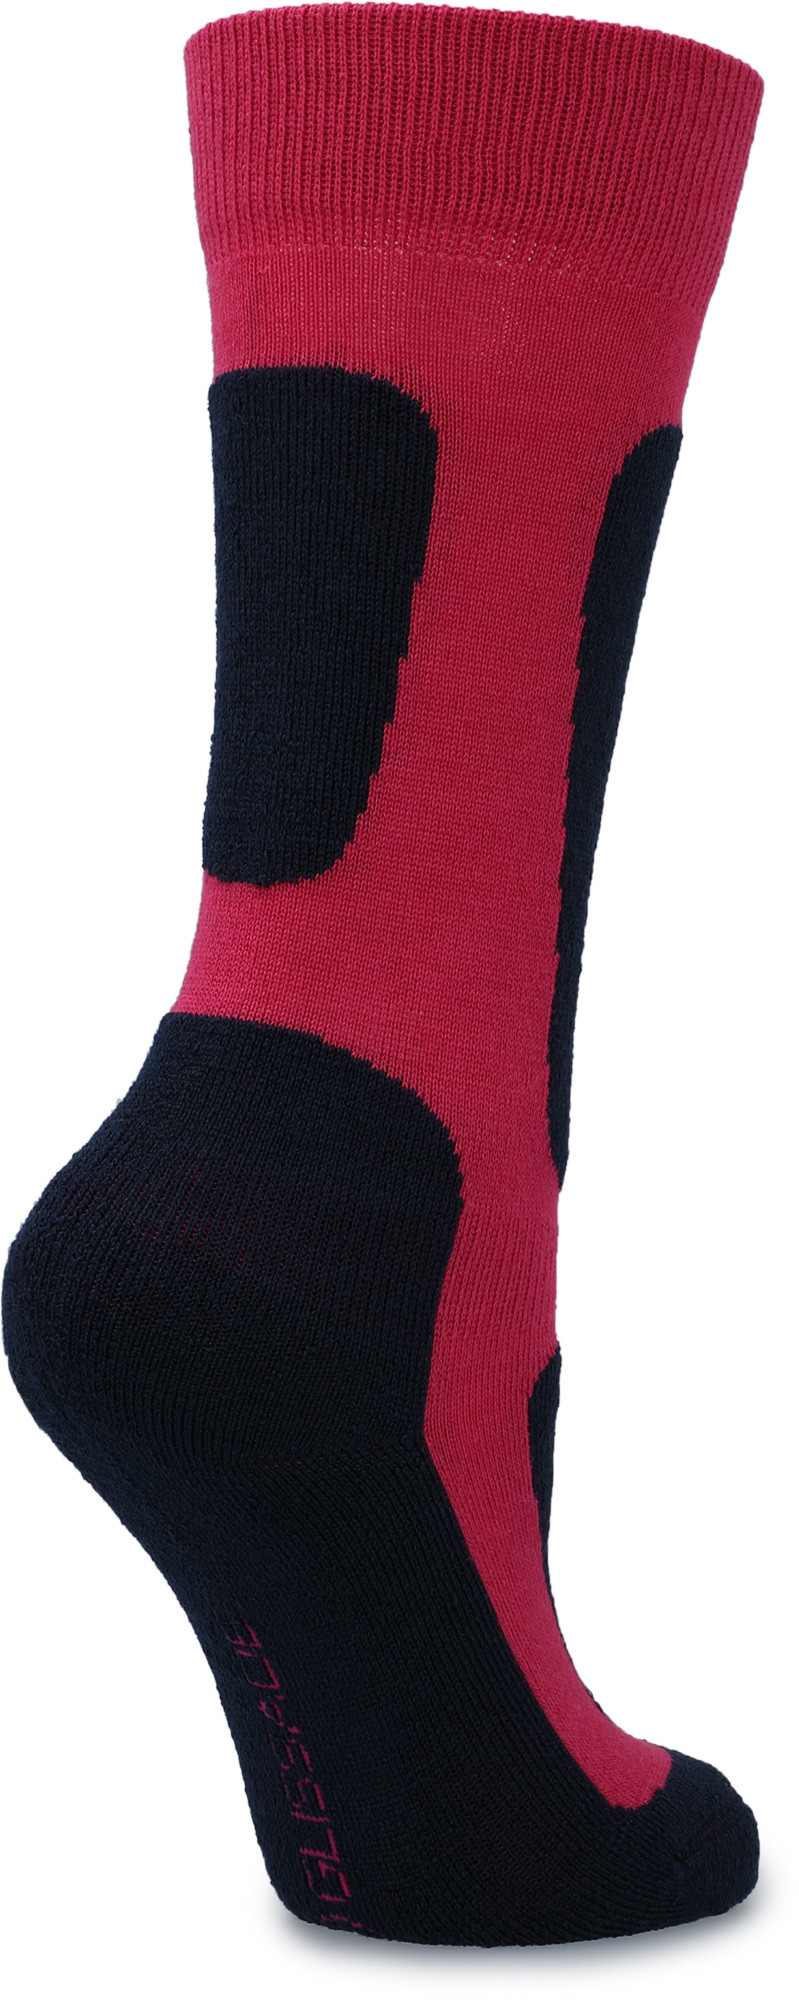 Шкарпетки дитячі Glissade, 1 пара